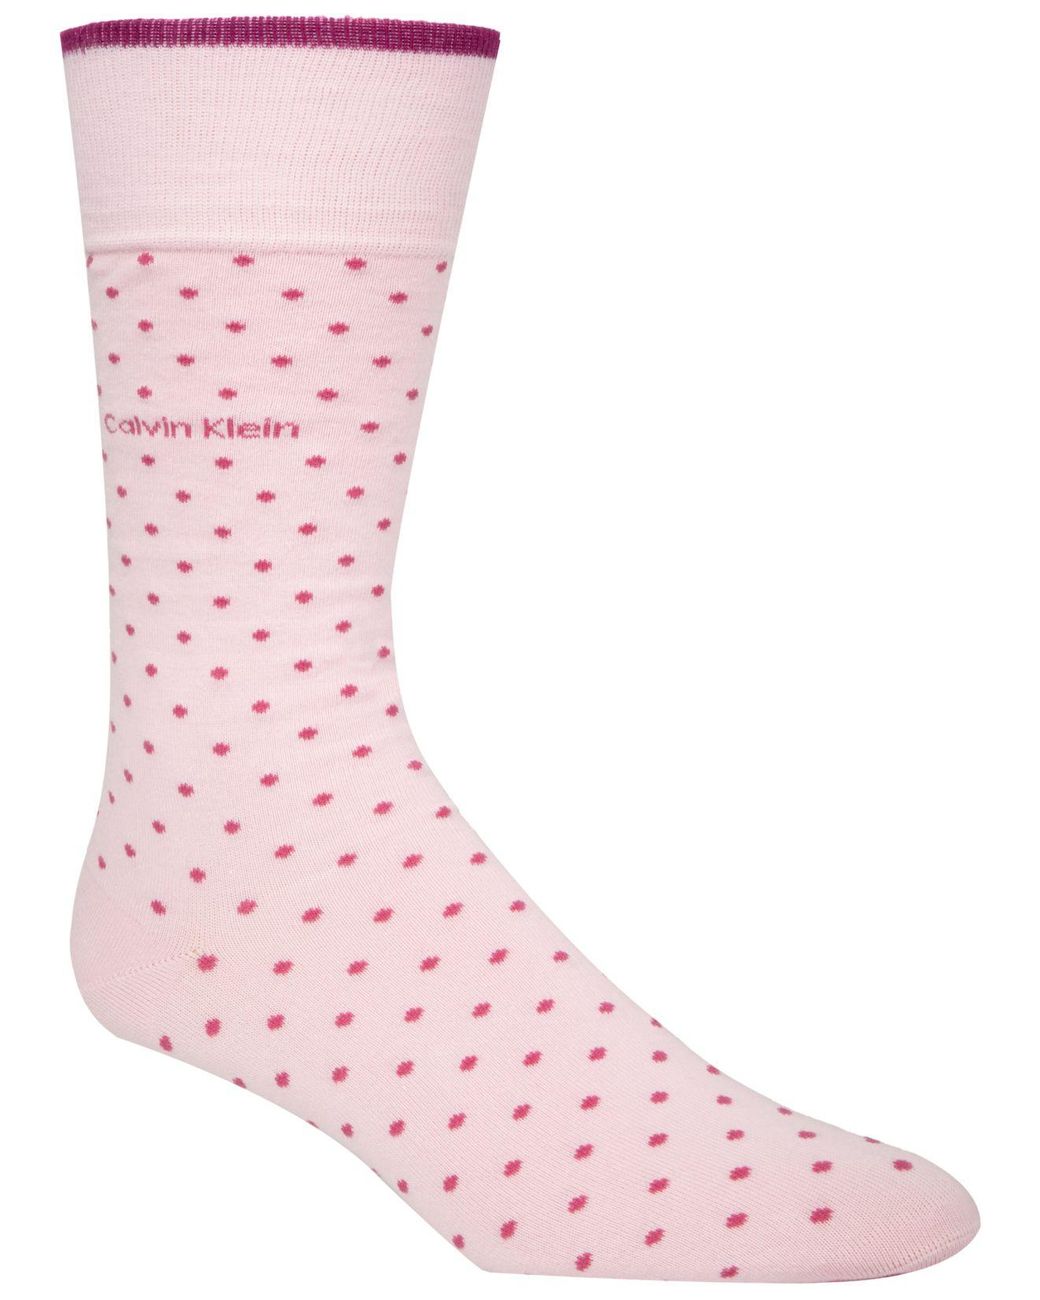 Calvin Klein Cotton Giza Pindot Crew Socks in Pink for Men - Lyst